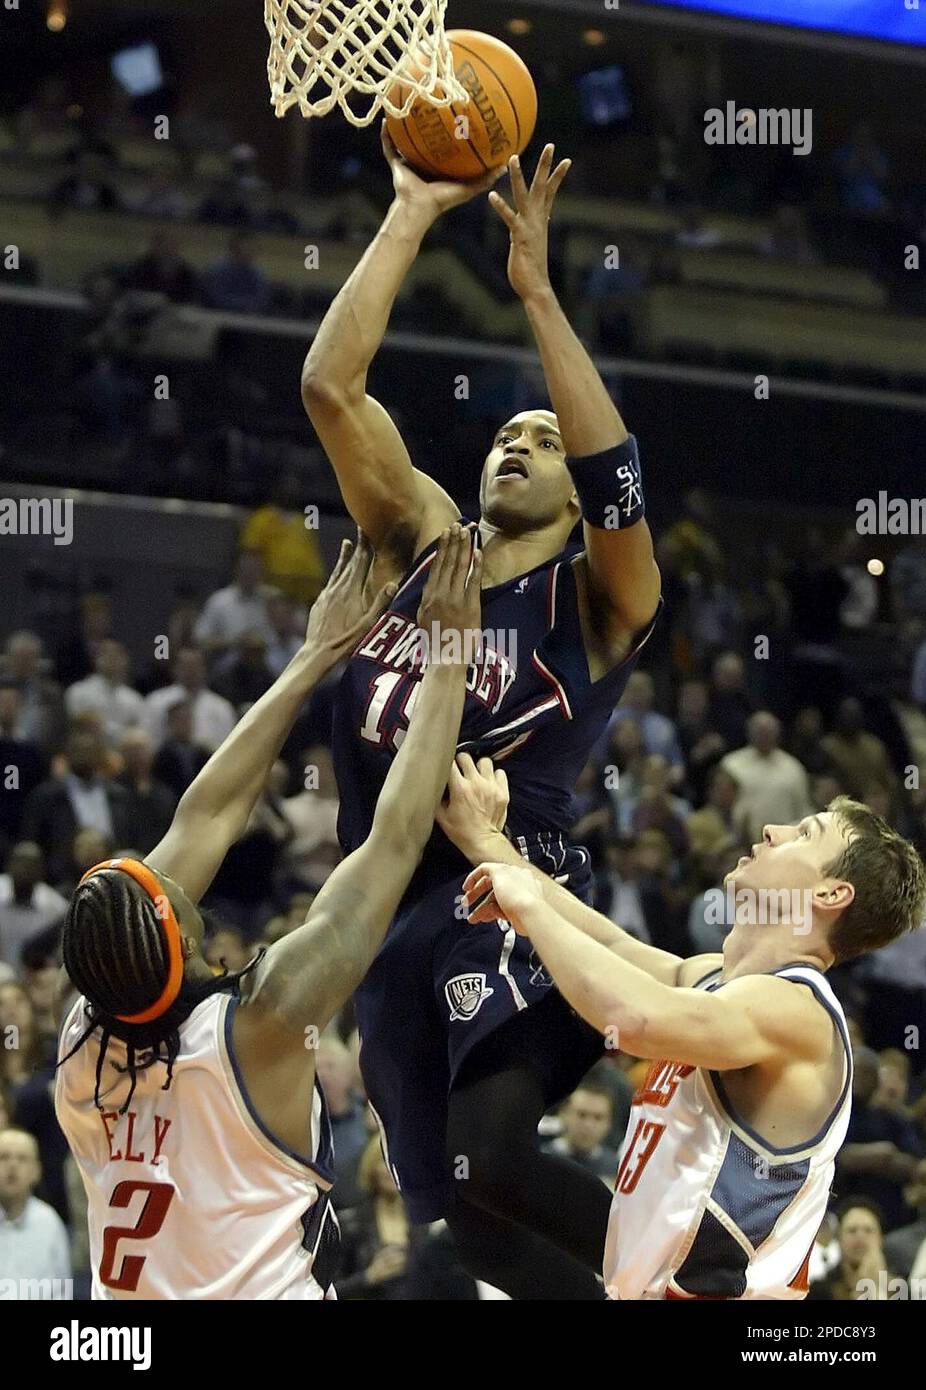 NBA: Charlotte Bobcats at New Jersey Nets